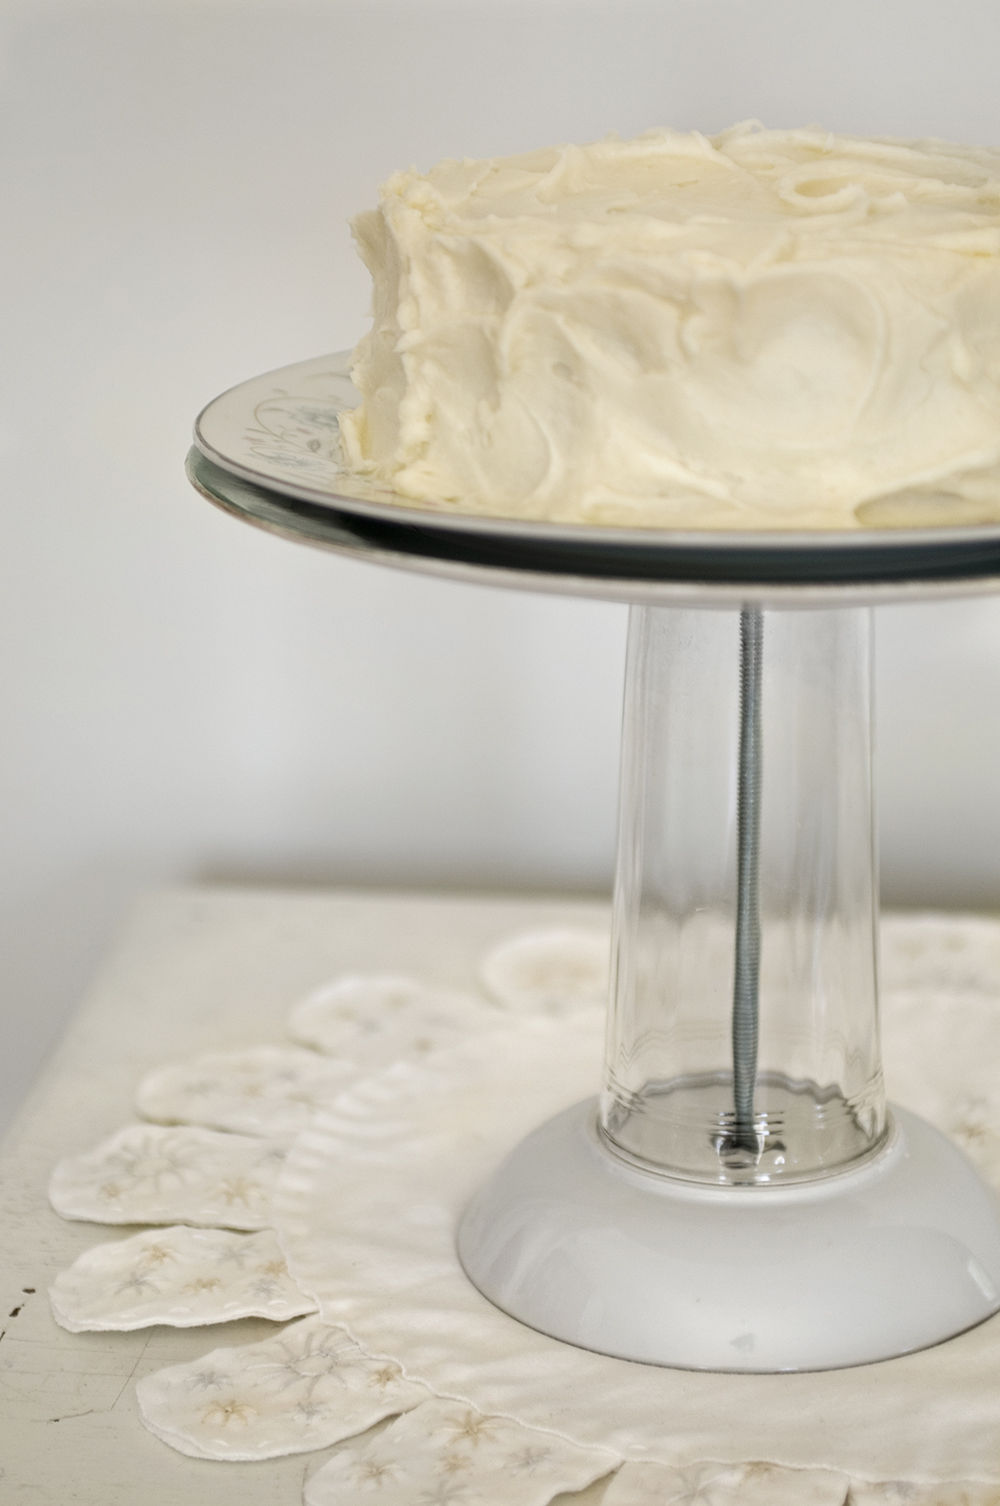 White cake on a homemade cake stand